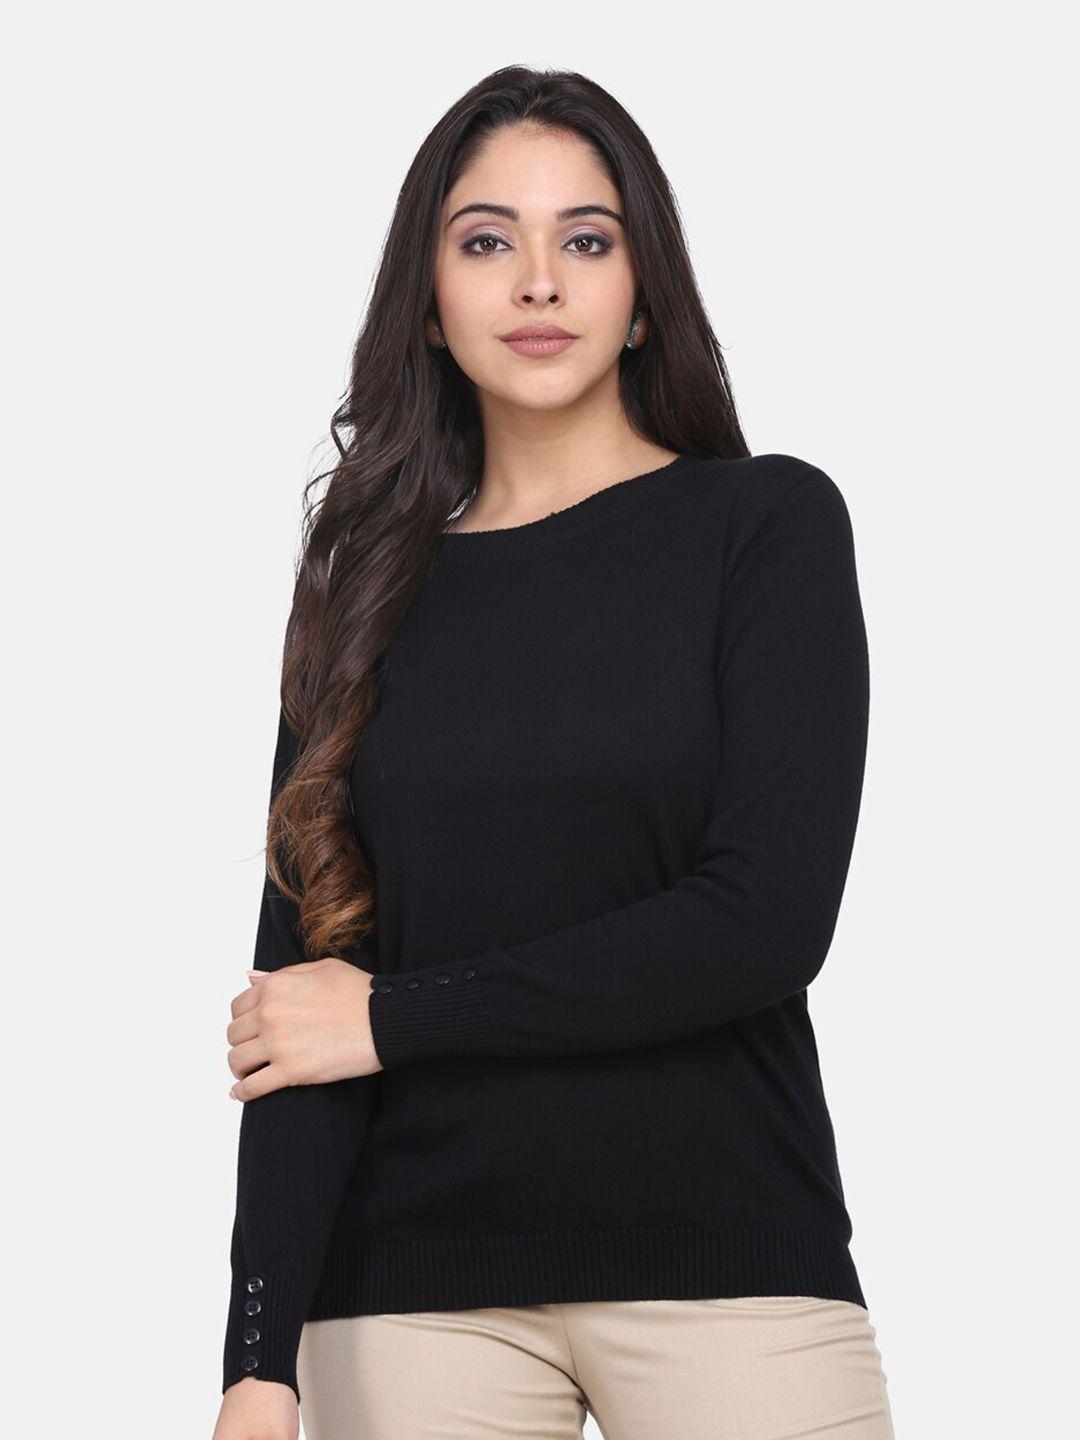 powersutra women black long sleeve pullover